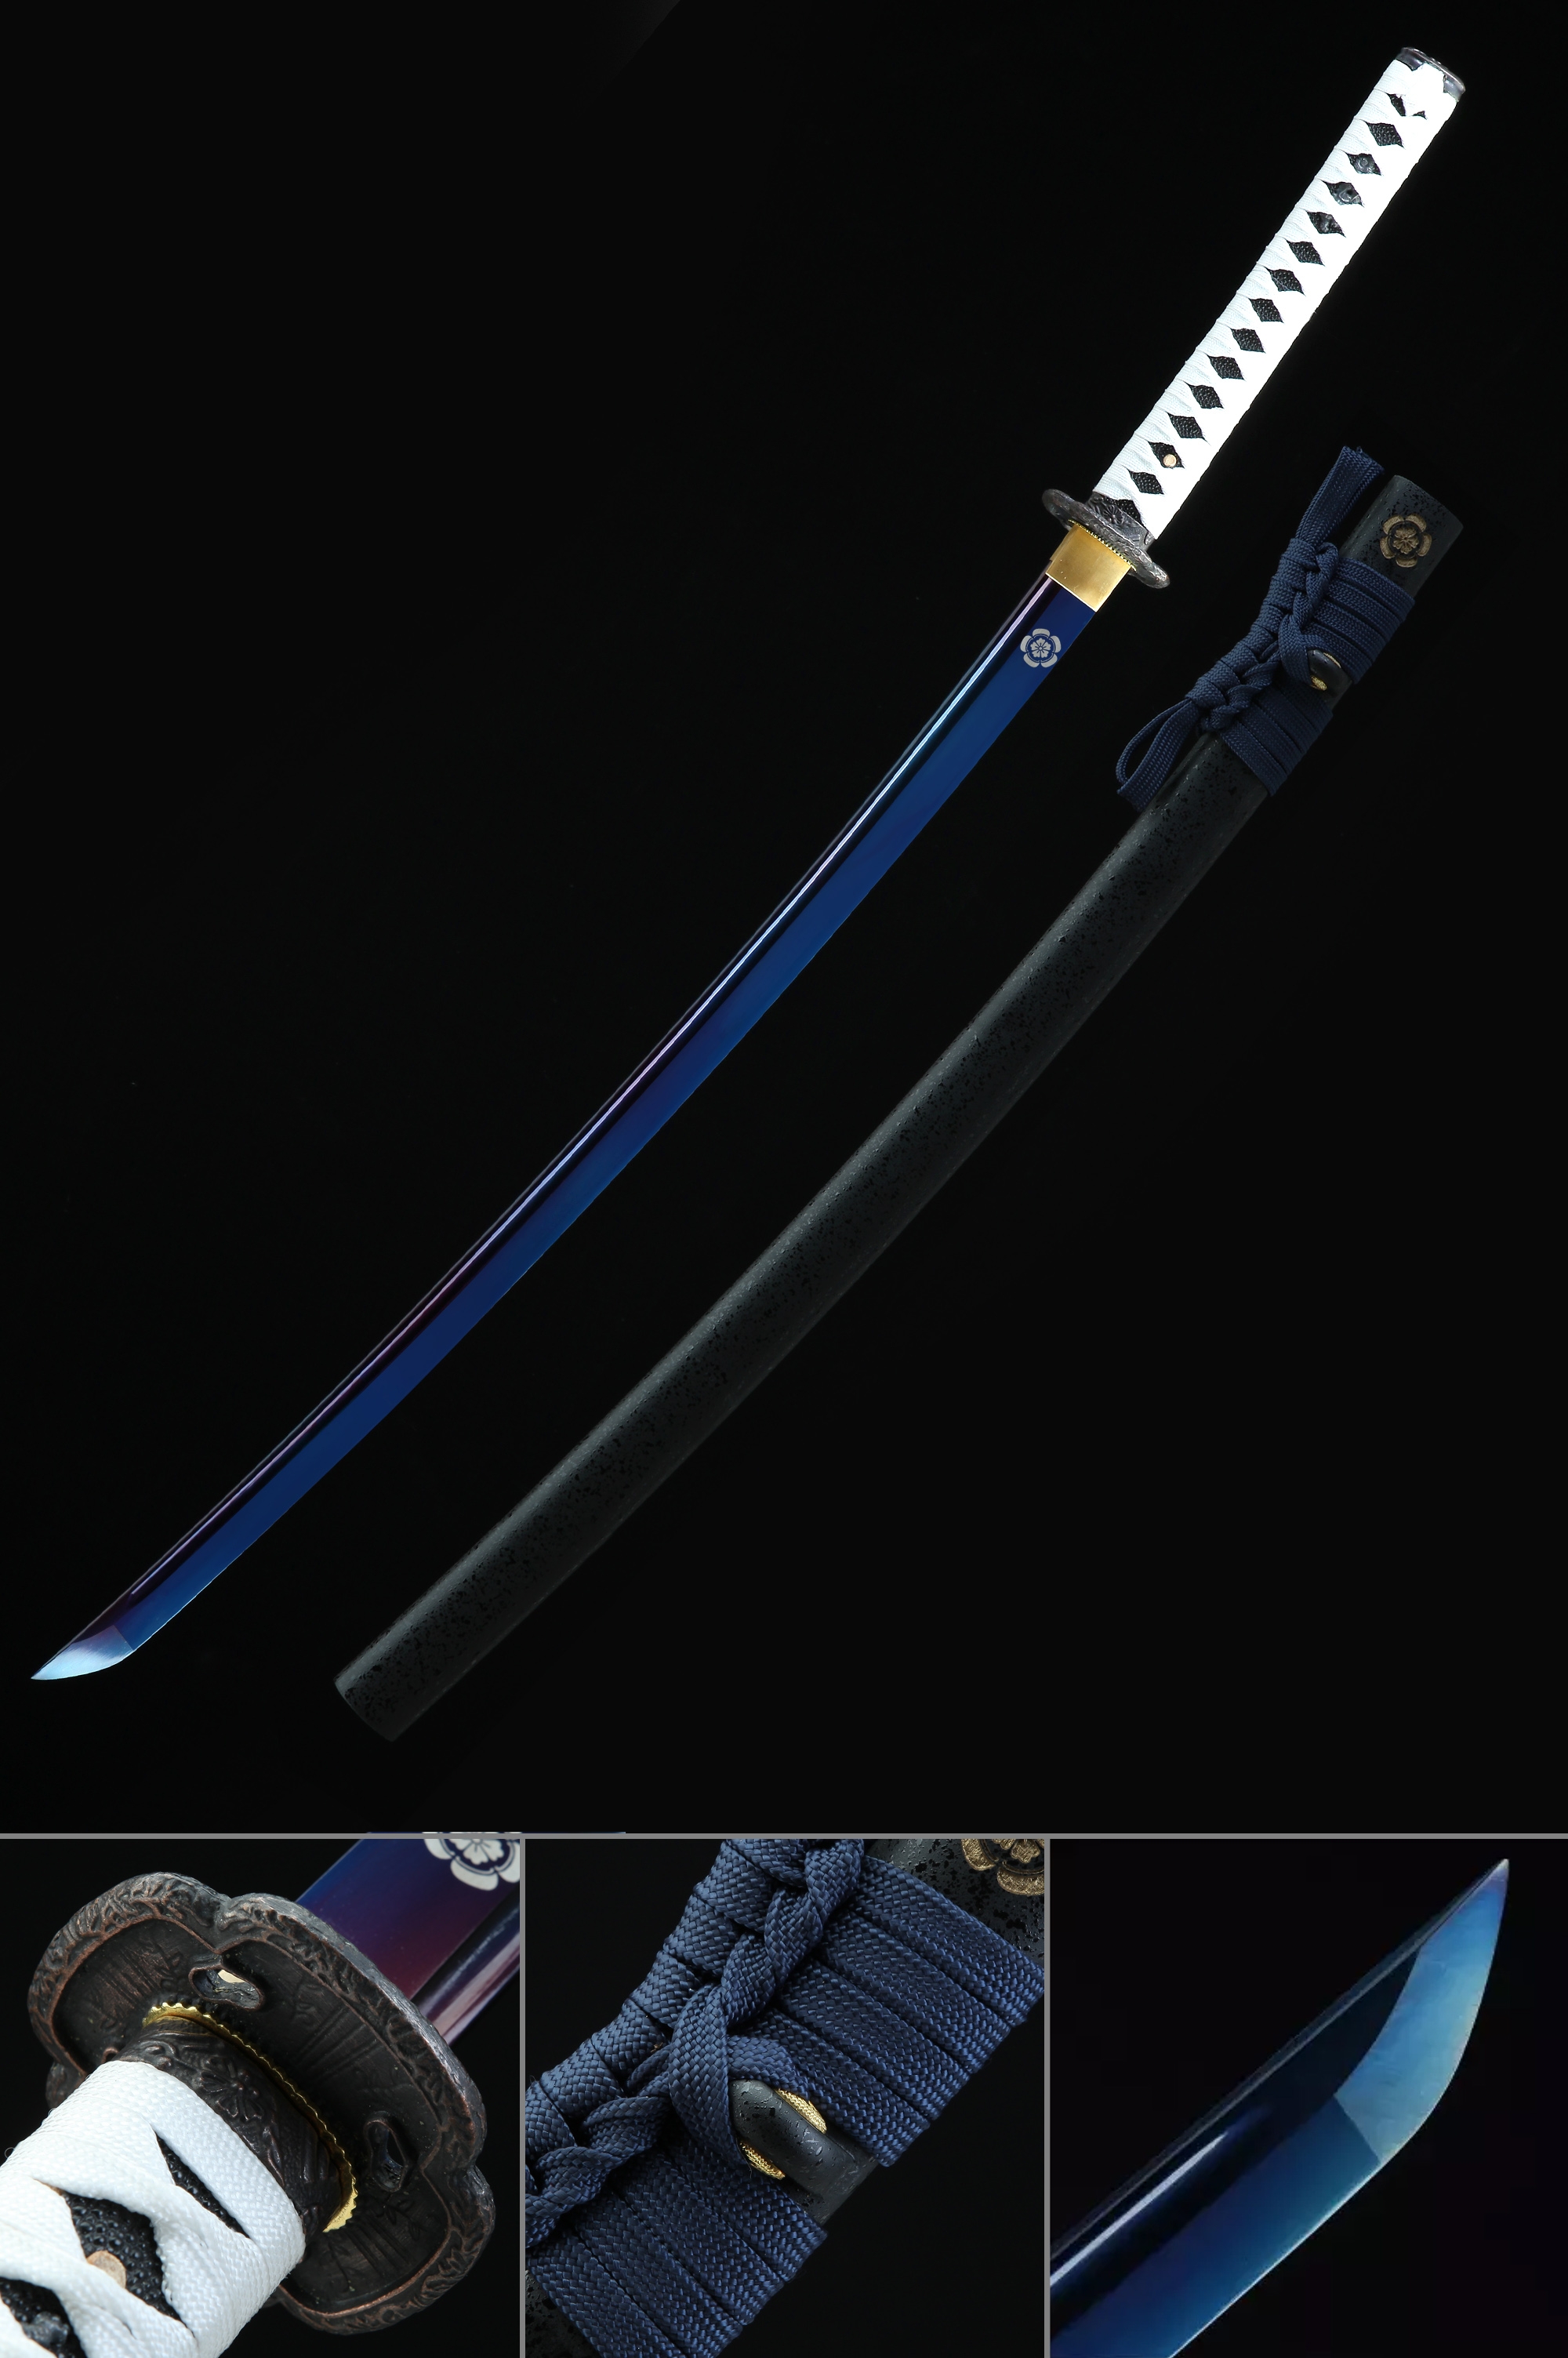 Handgemachte Tsushima Ghost Clan Sakai Katana Schwerter Cosplay Replik Mit Blauer Klinge